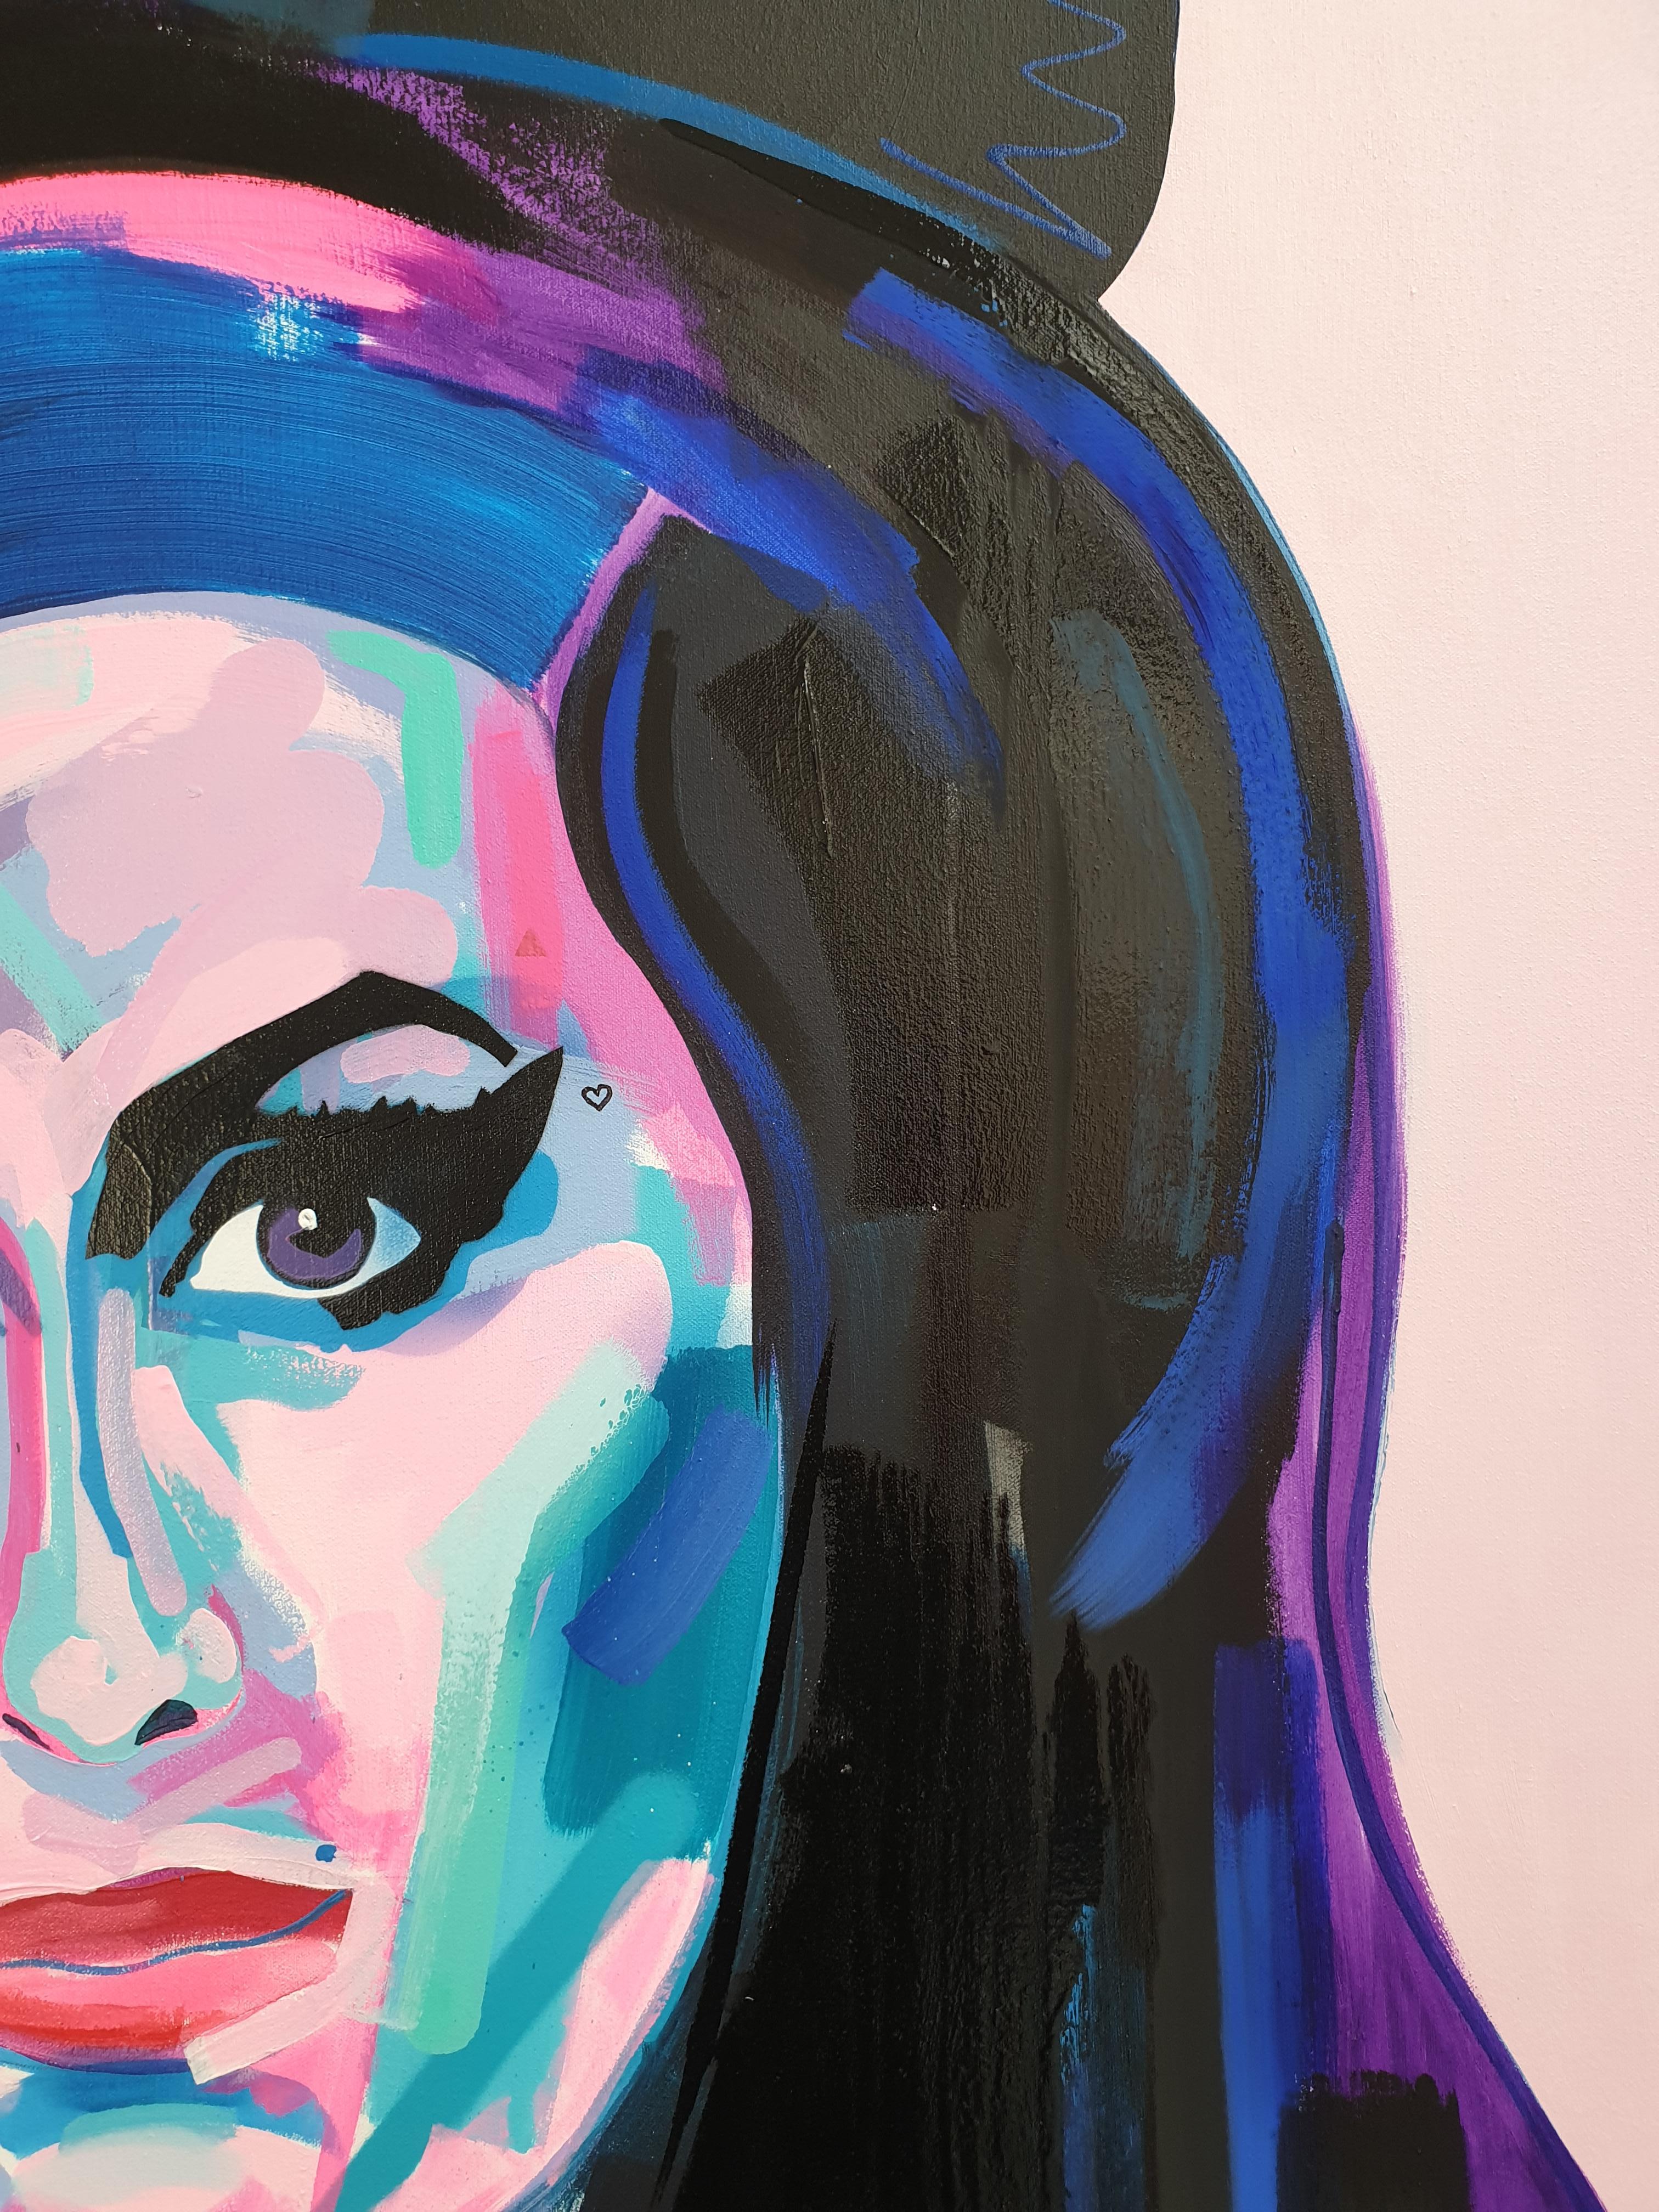 Amy Winehouse - Acrylic, Modern Art, Contemporary Art, Jazz Singer, Fashion - Black Portrait Painting by Tim Fowler